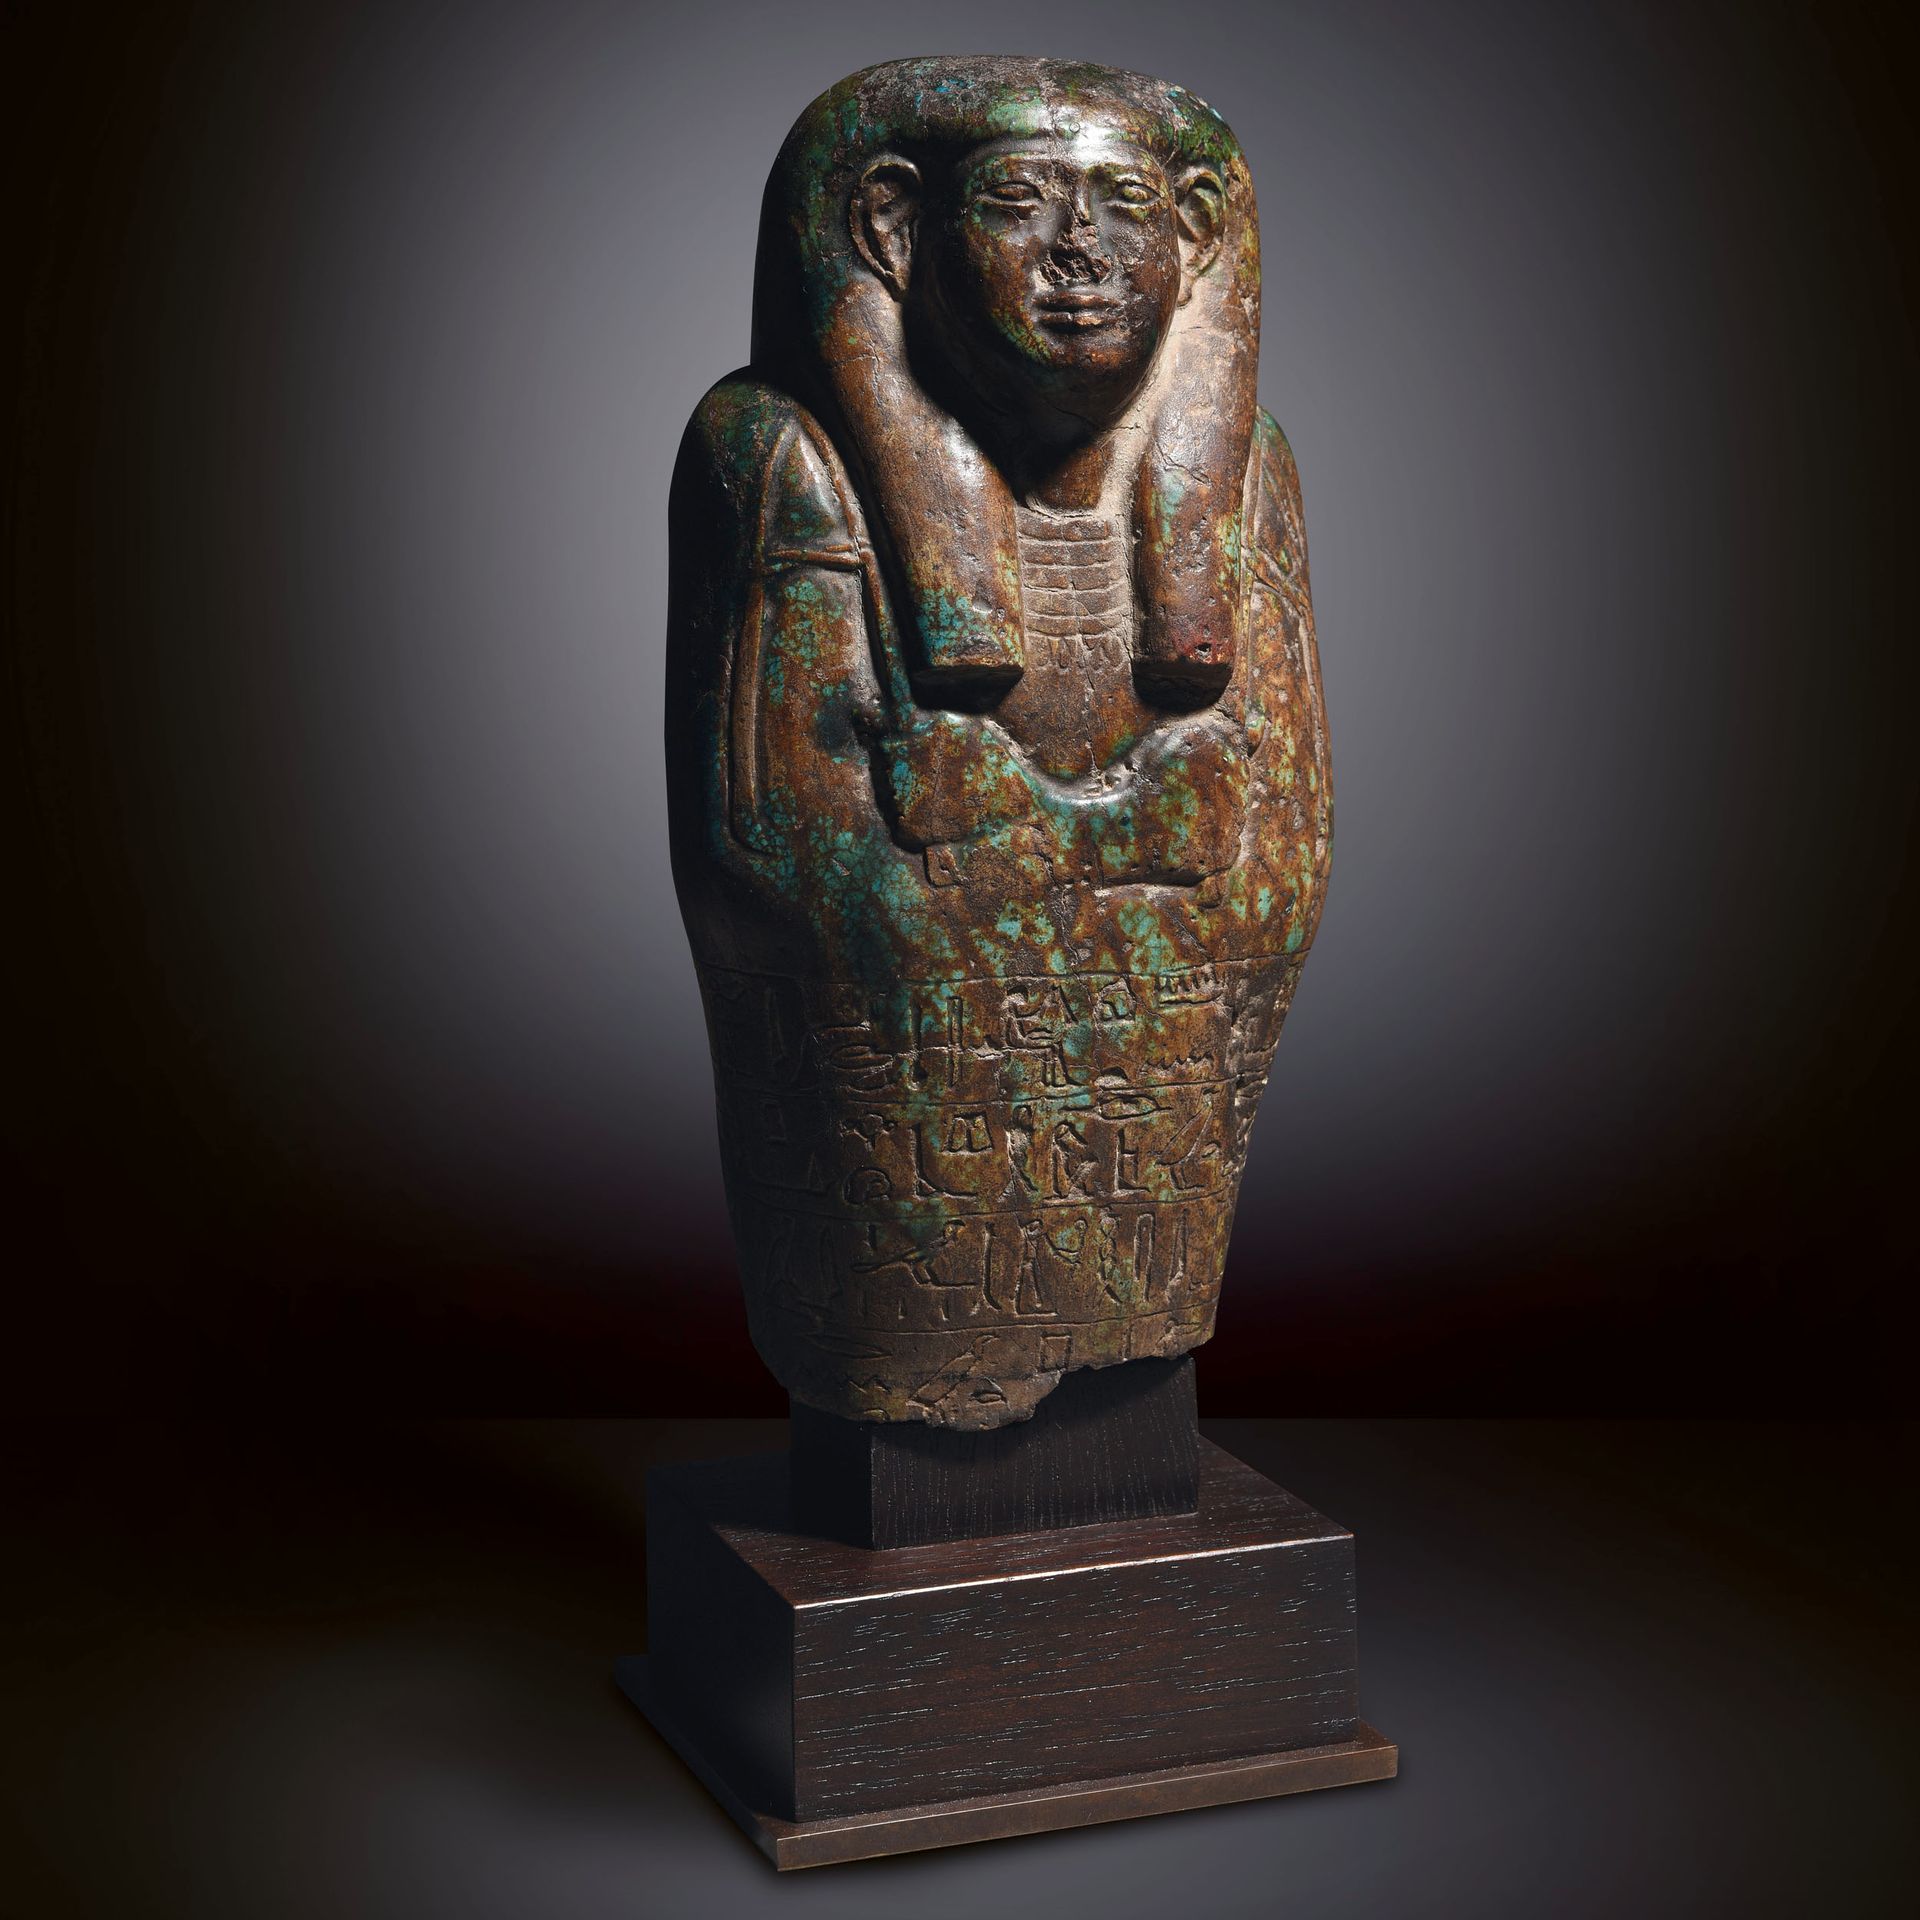 Null 重要的shabti碎片，名称为peduamonapet

埃及，早期塞特时期，第26王朝

带有模仿青铜的釉面的硬石

尺寸：8,5 x 16 cm
&hellip;